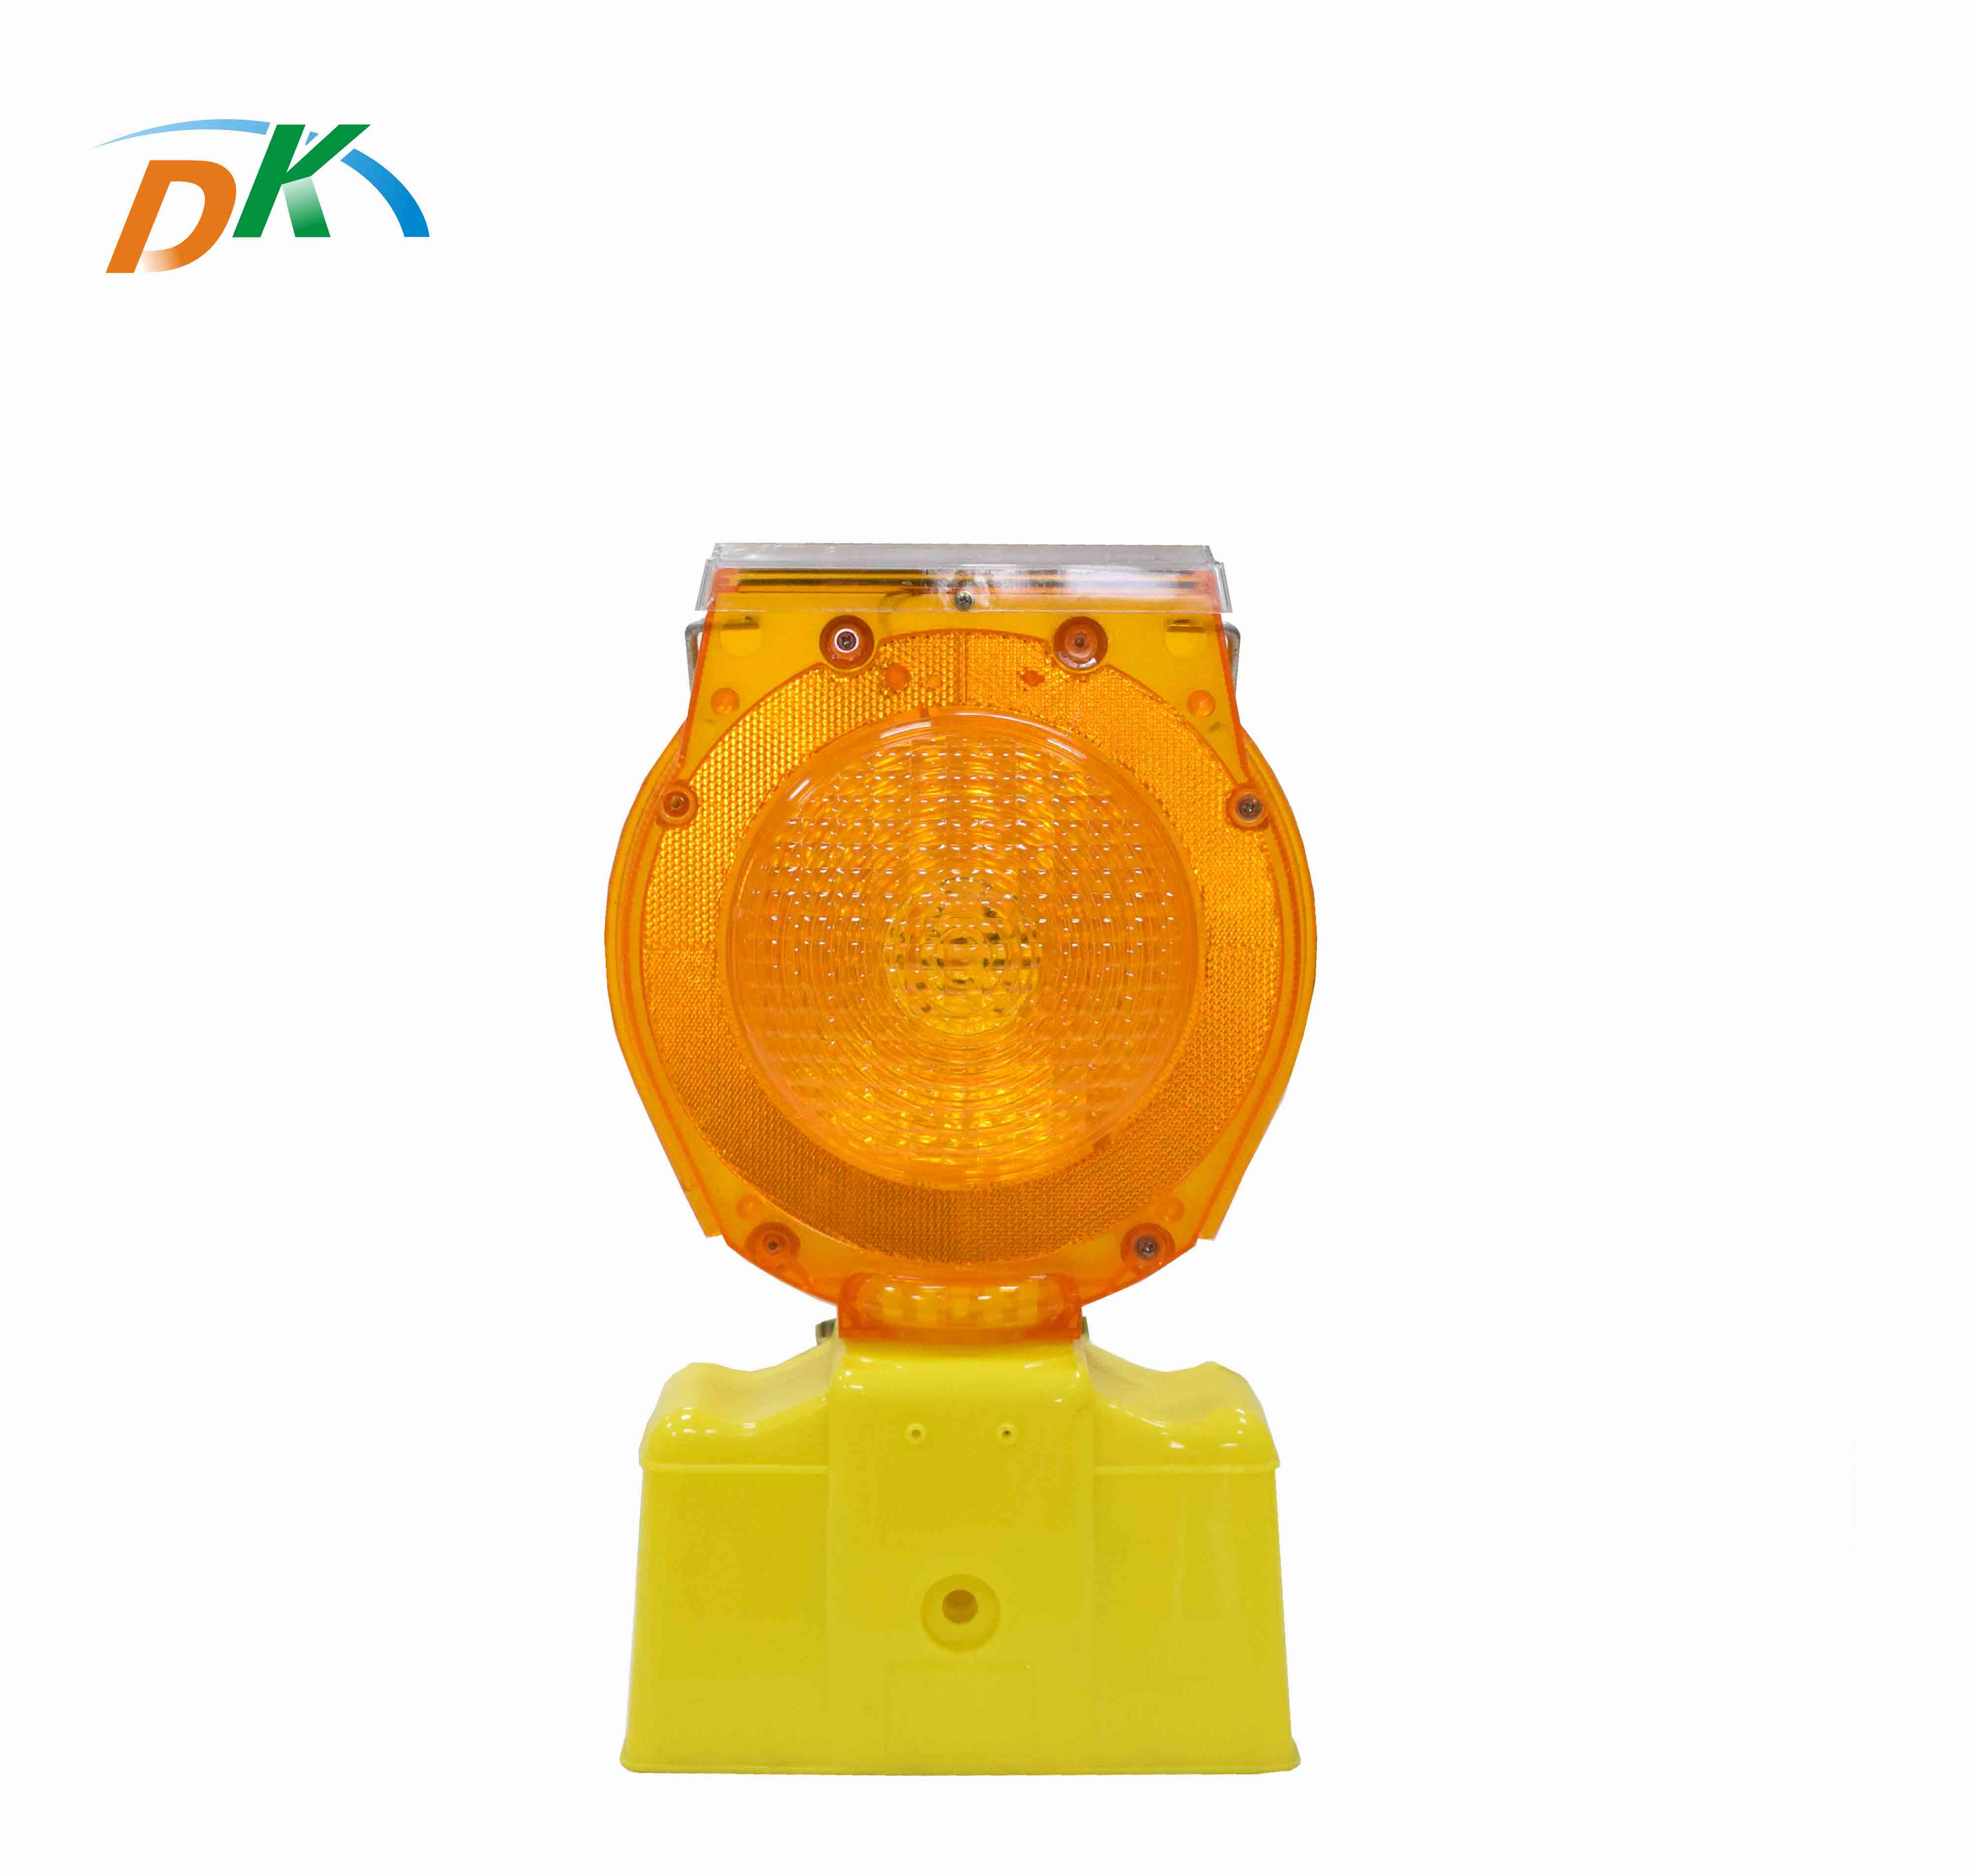 DK LED solar warning barricade light customization to open mold production